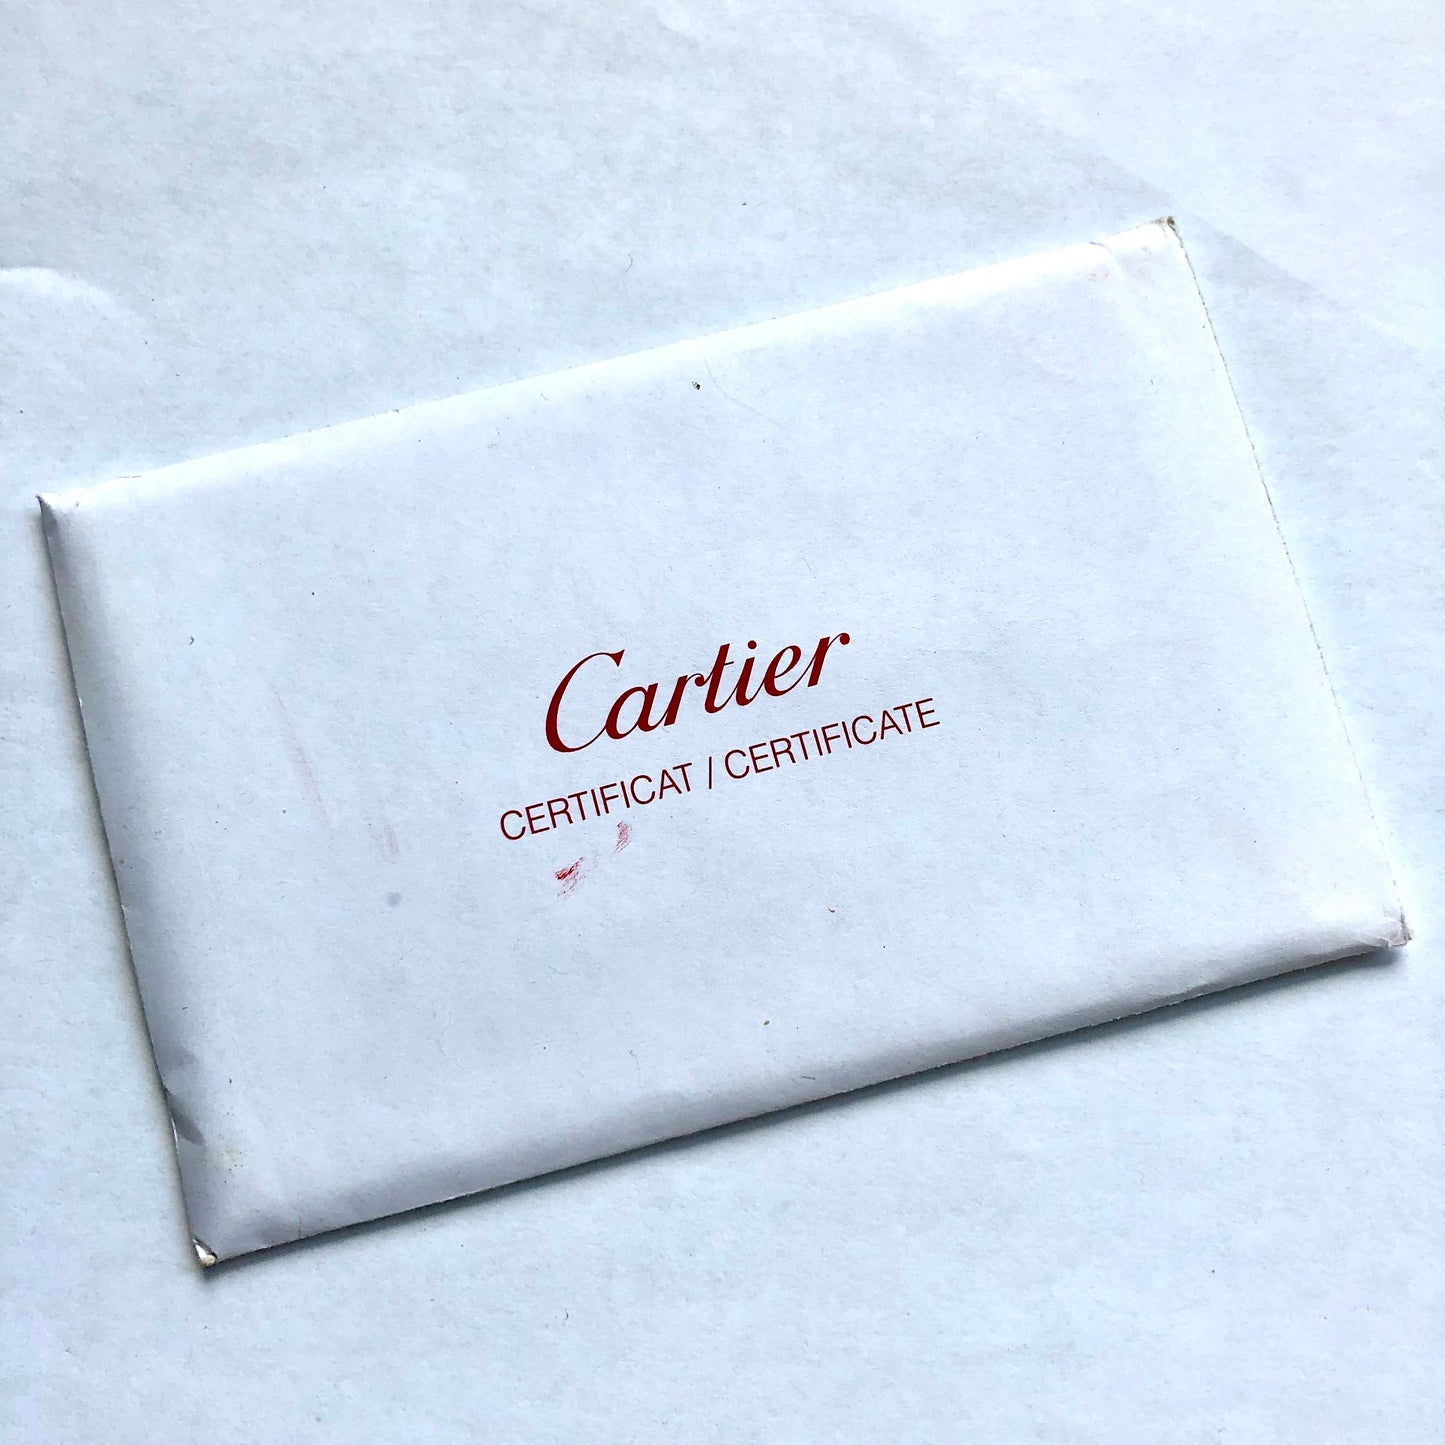 CARTIER Certificate Folder 5x3.25 inches